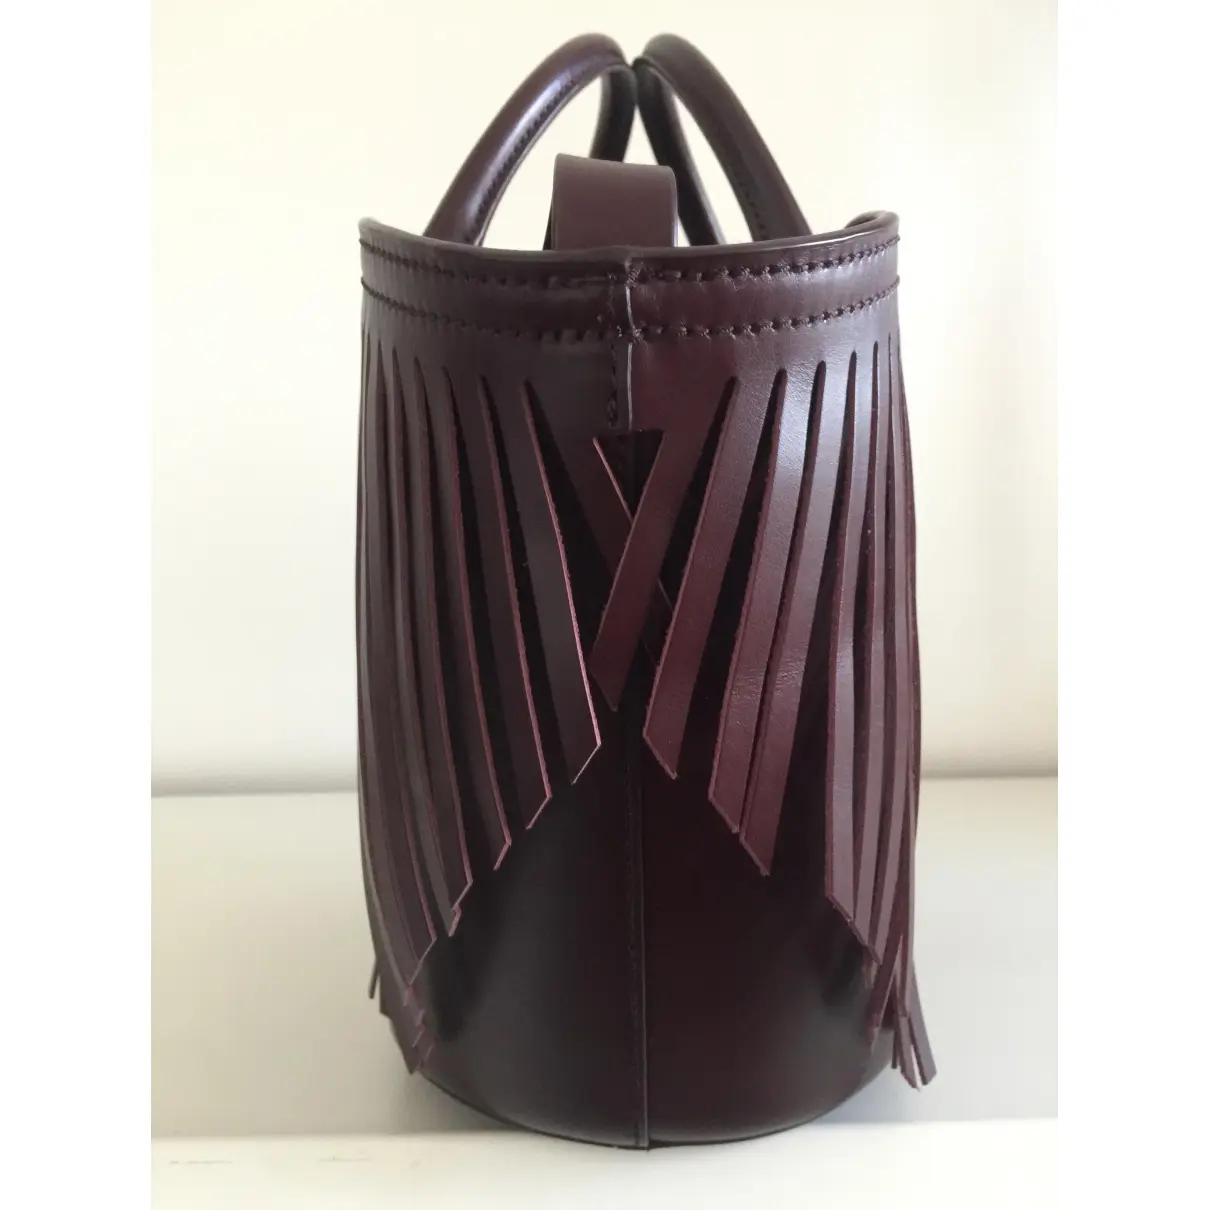 Buy Trademark Leather handbag online